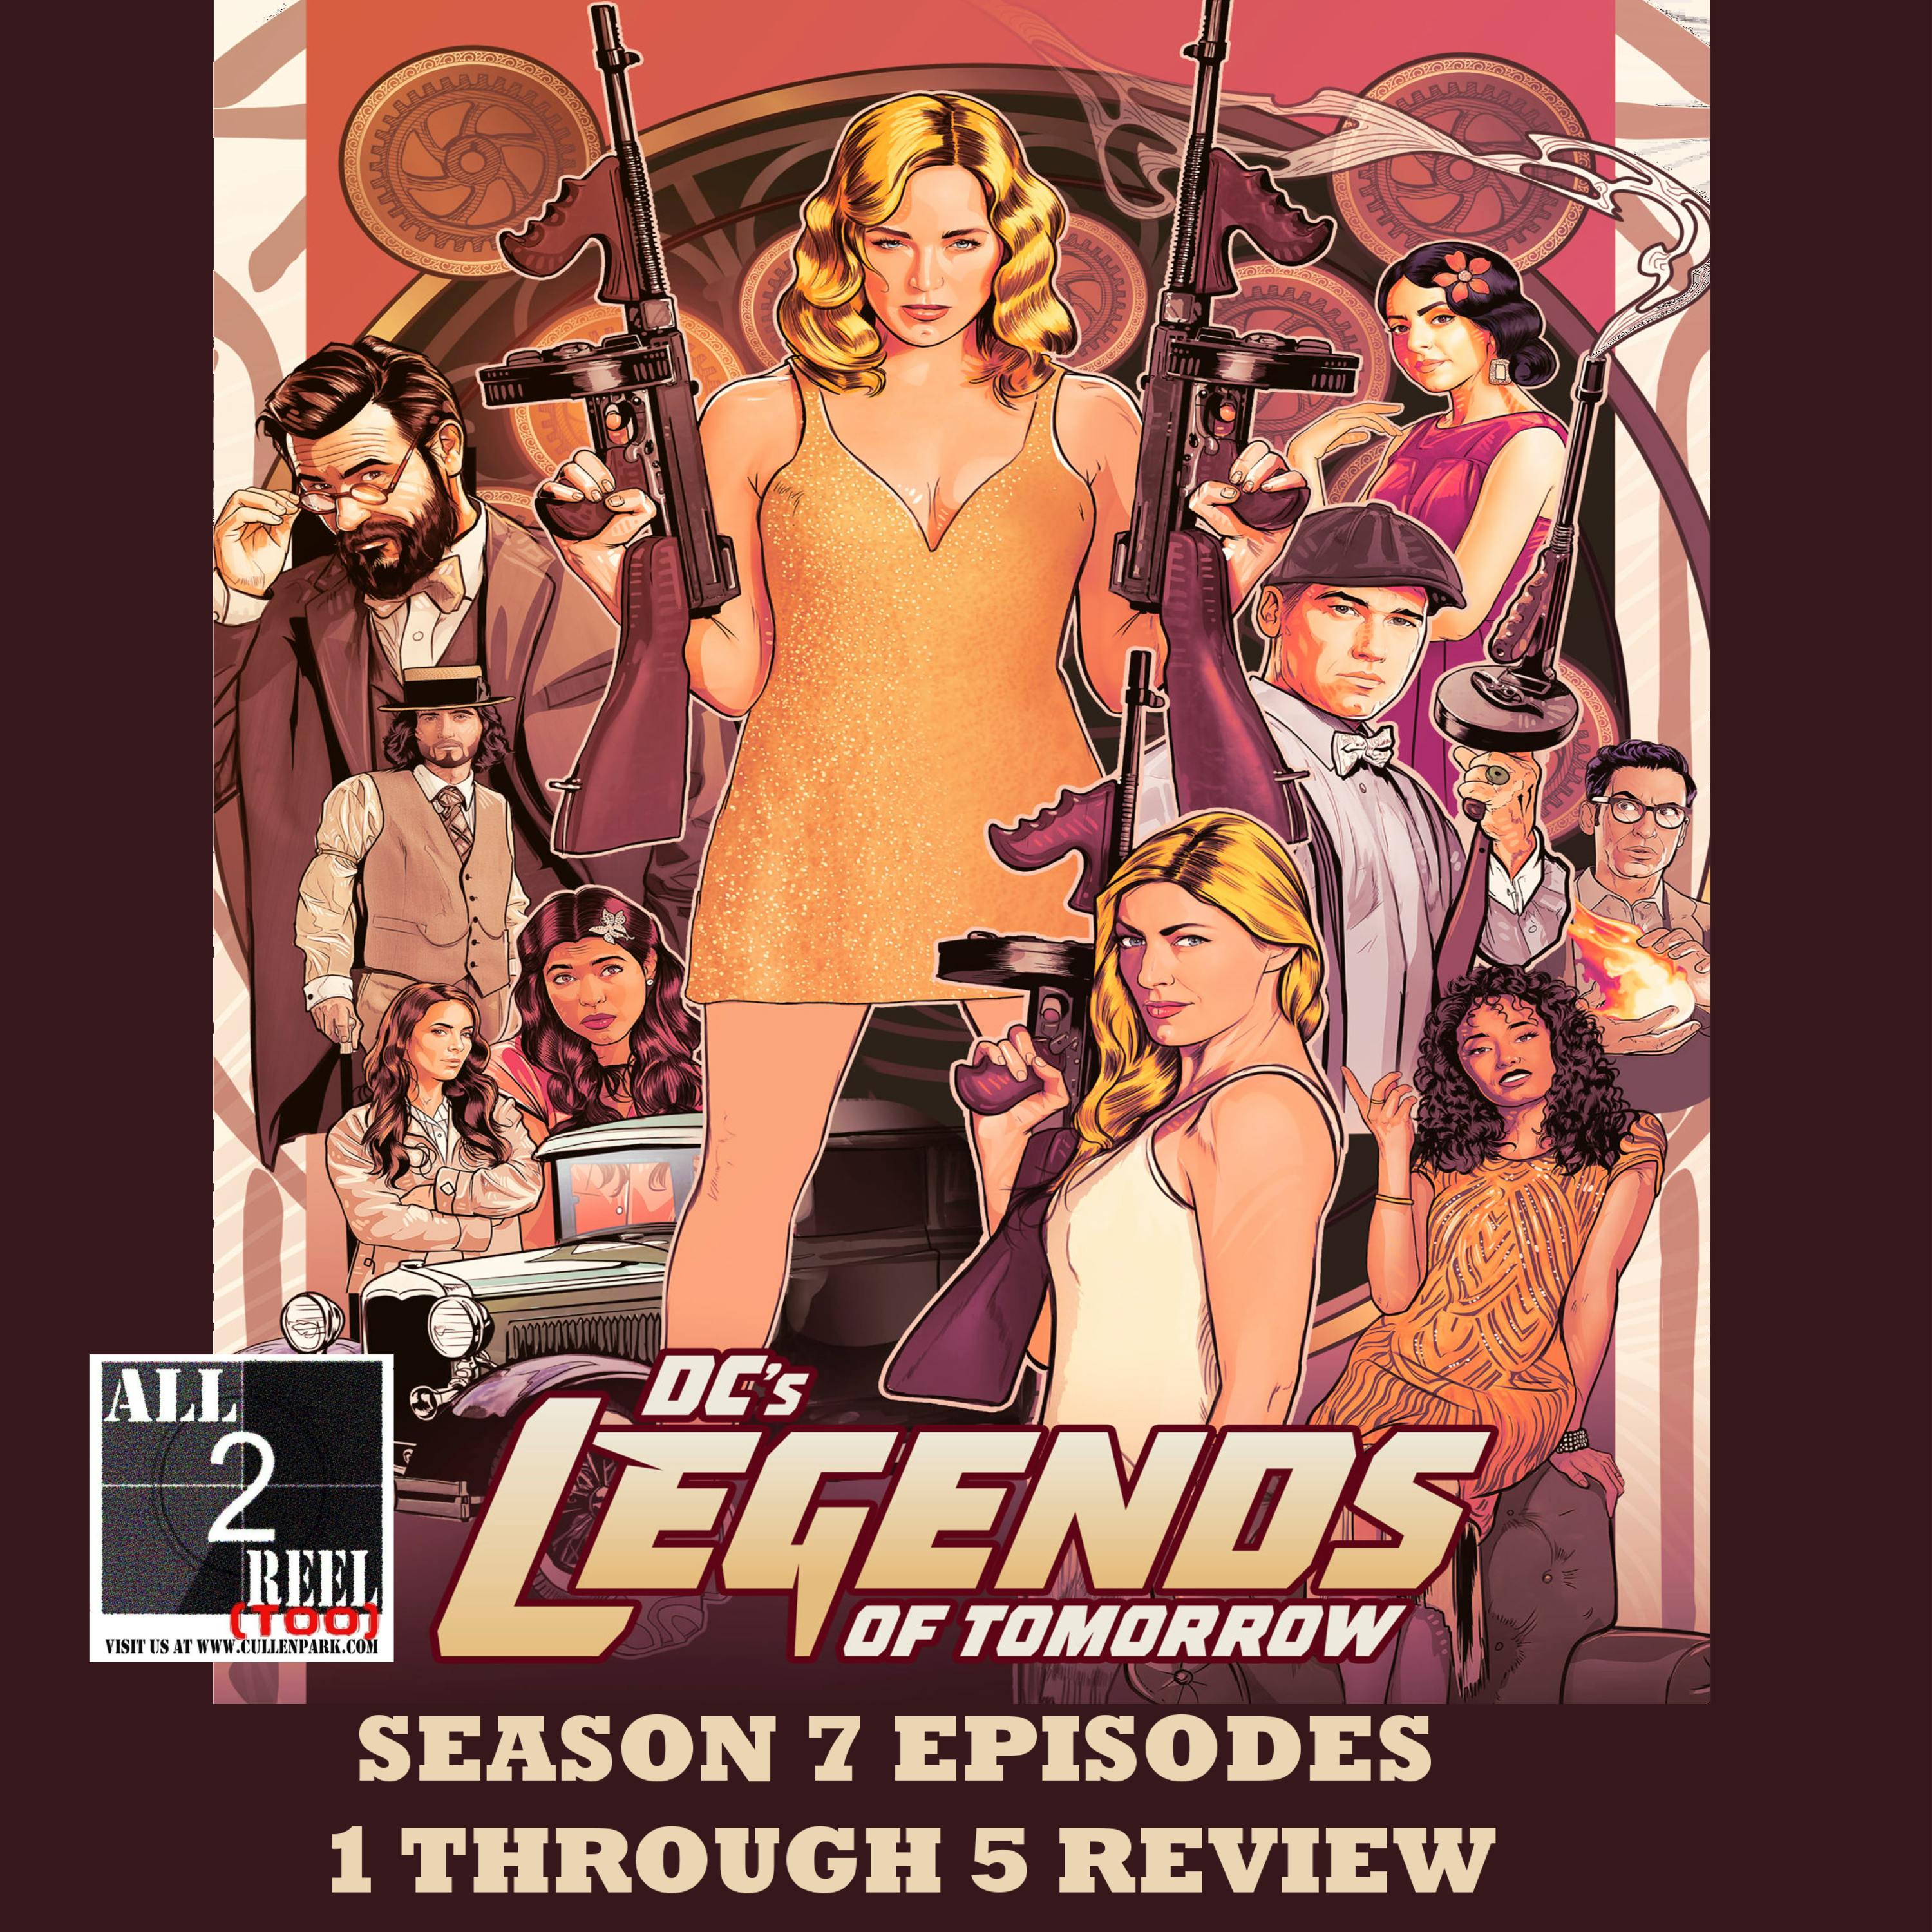 DC’s Legends of Tomorrow SEASON 7 EPISODE 1 through 5 REVIEW